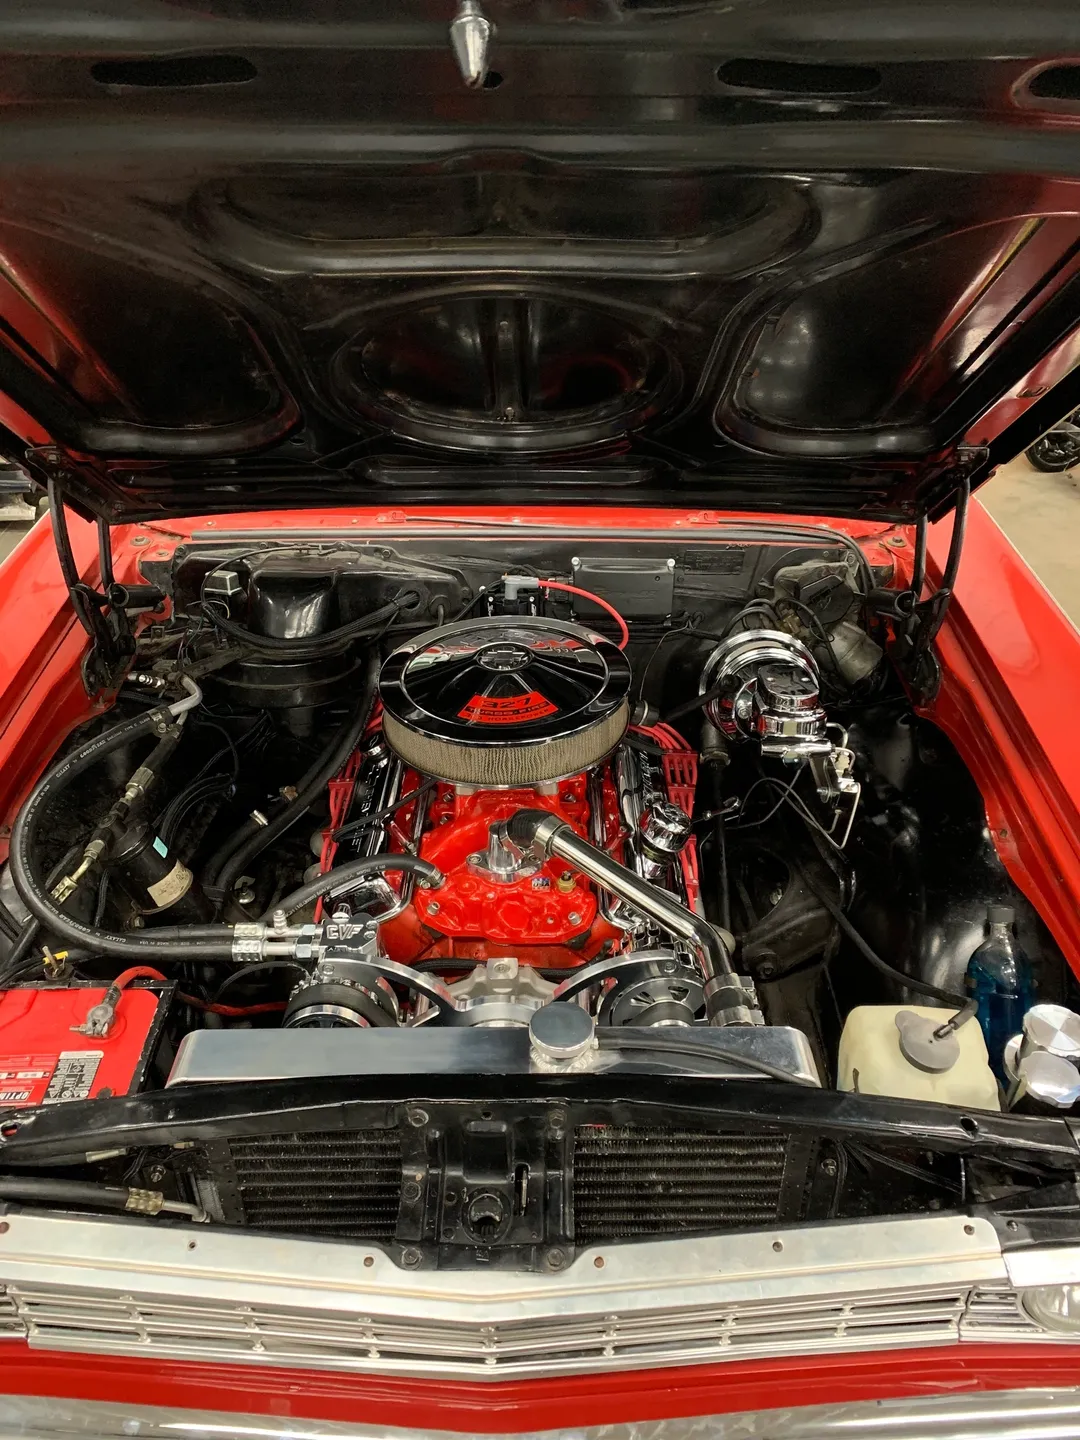 Engine under the Hood